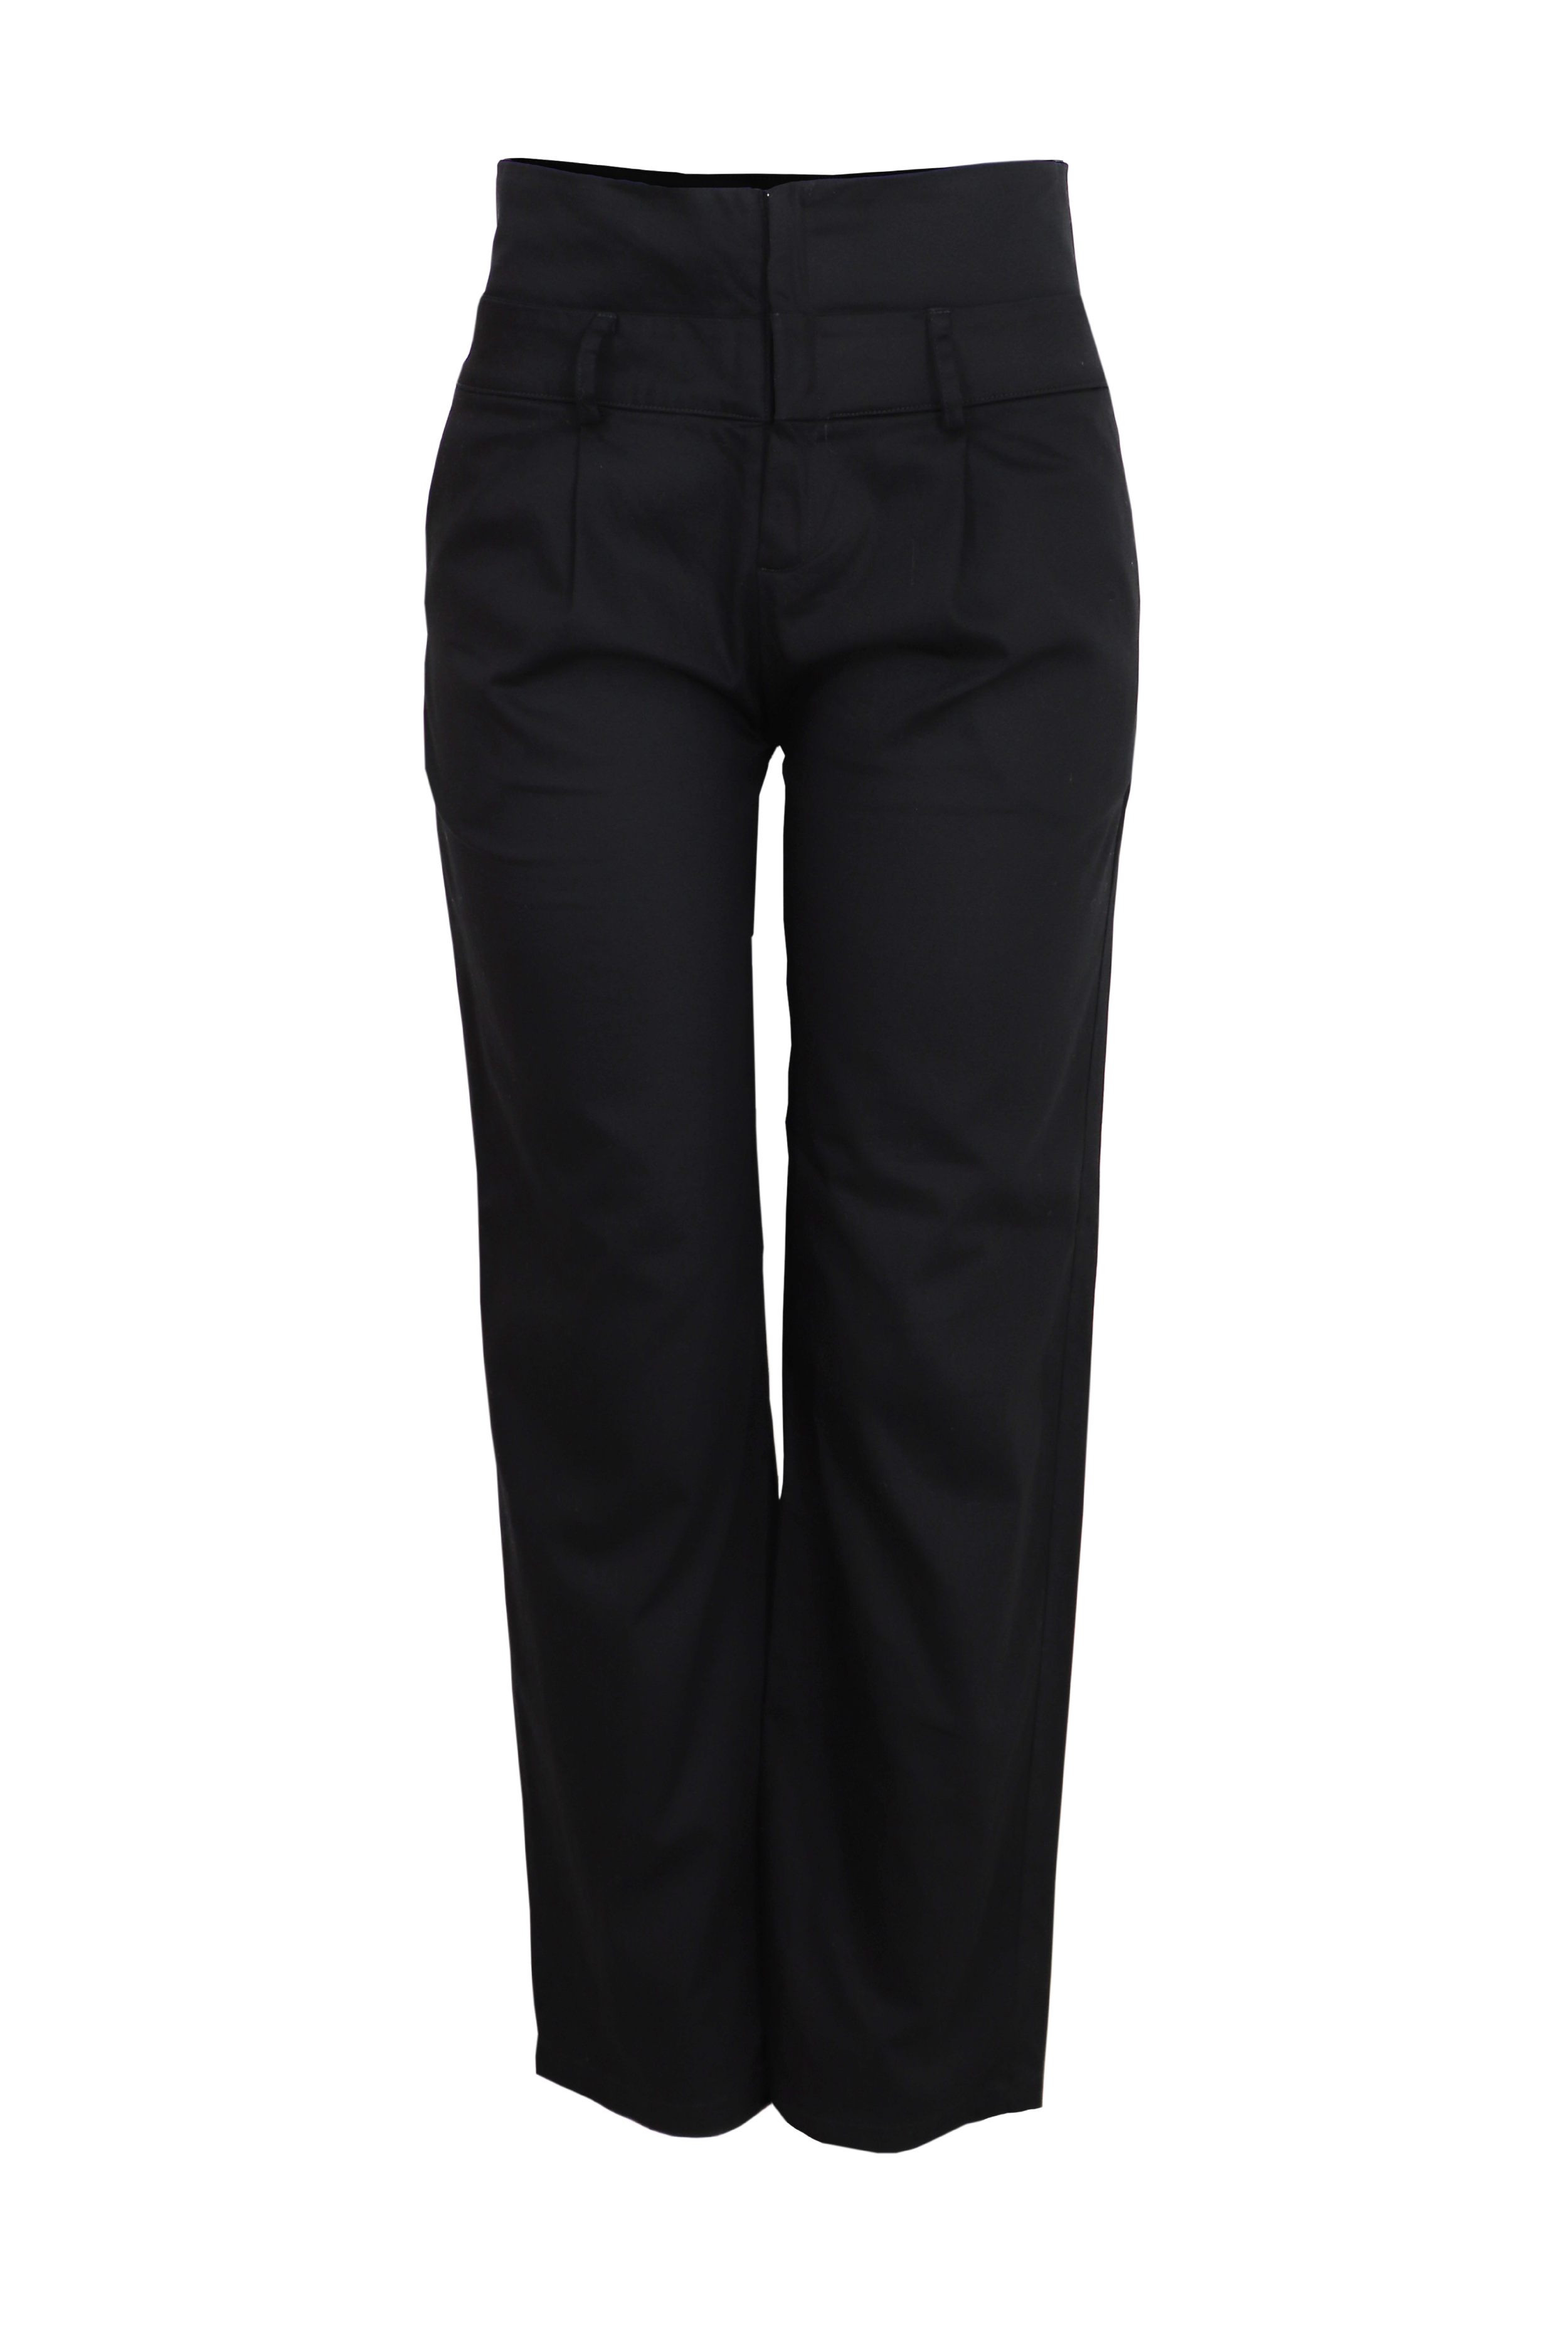 Pantalón de doble pretina Mirage color negro